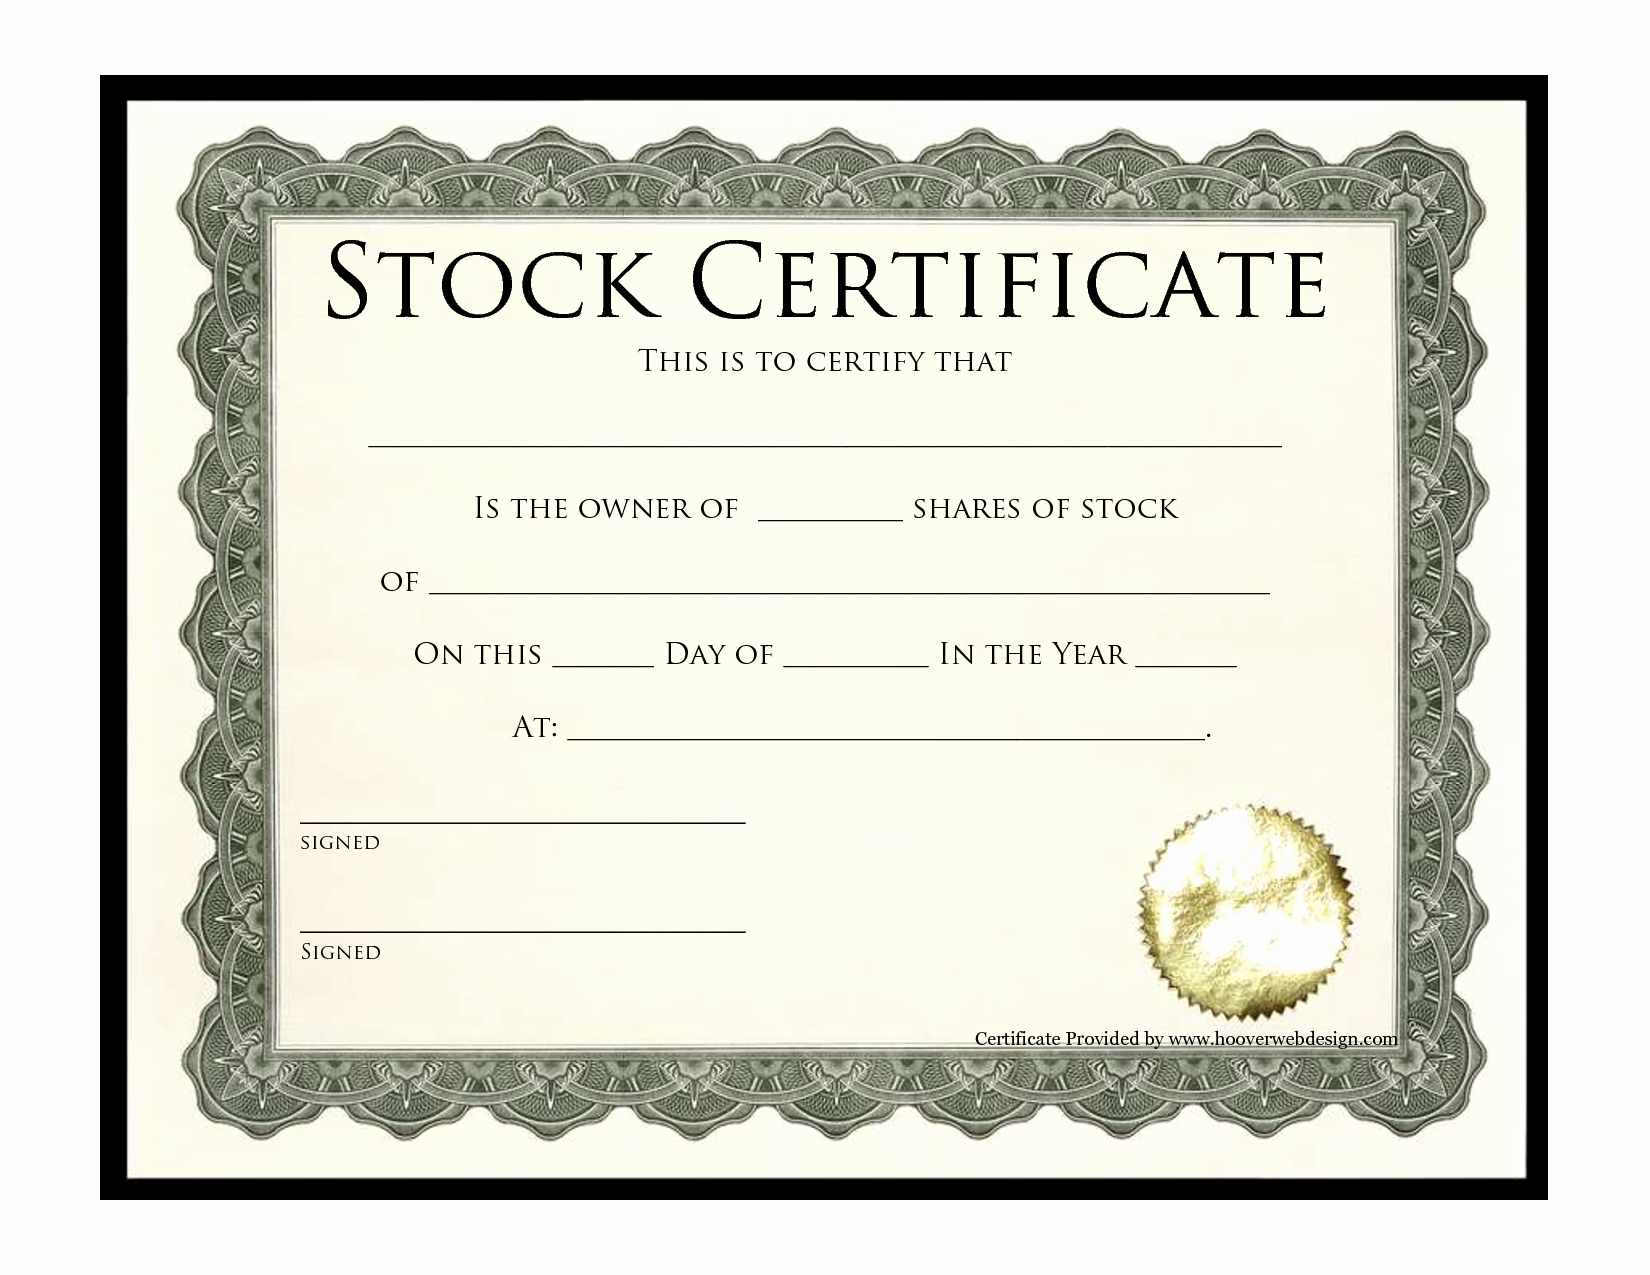 Corporate Stock Certificate Template Best Of Corporation Stock Certificate